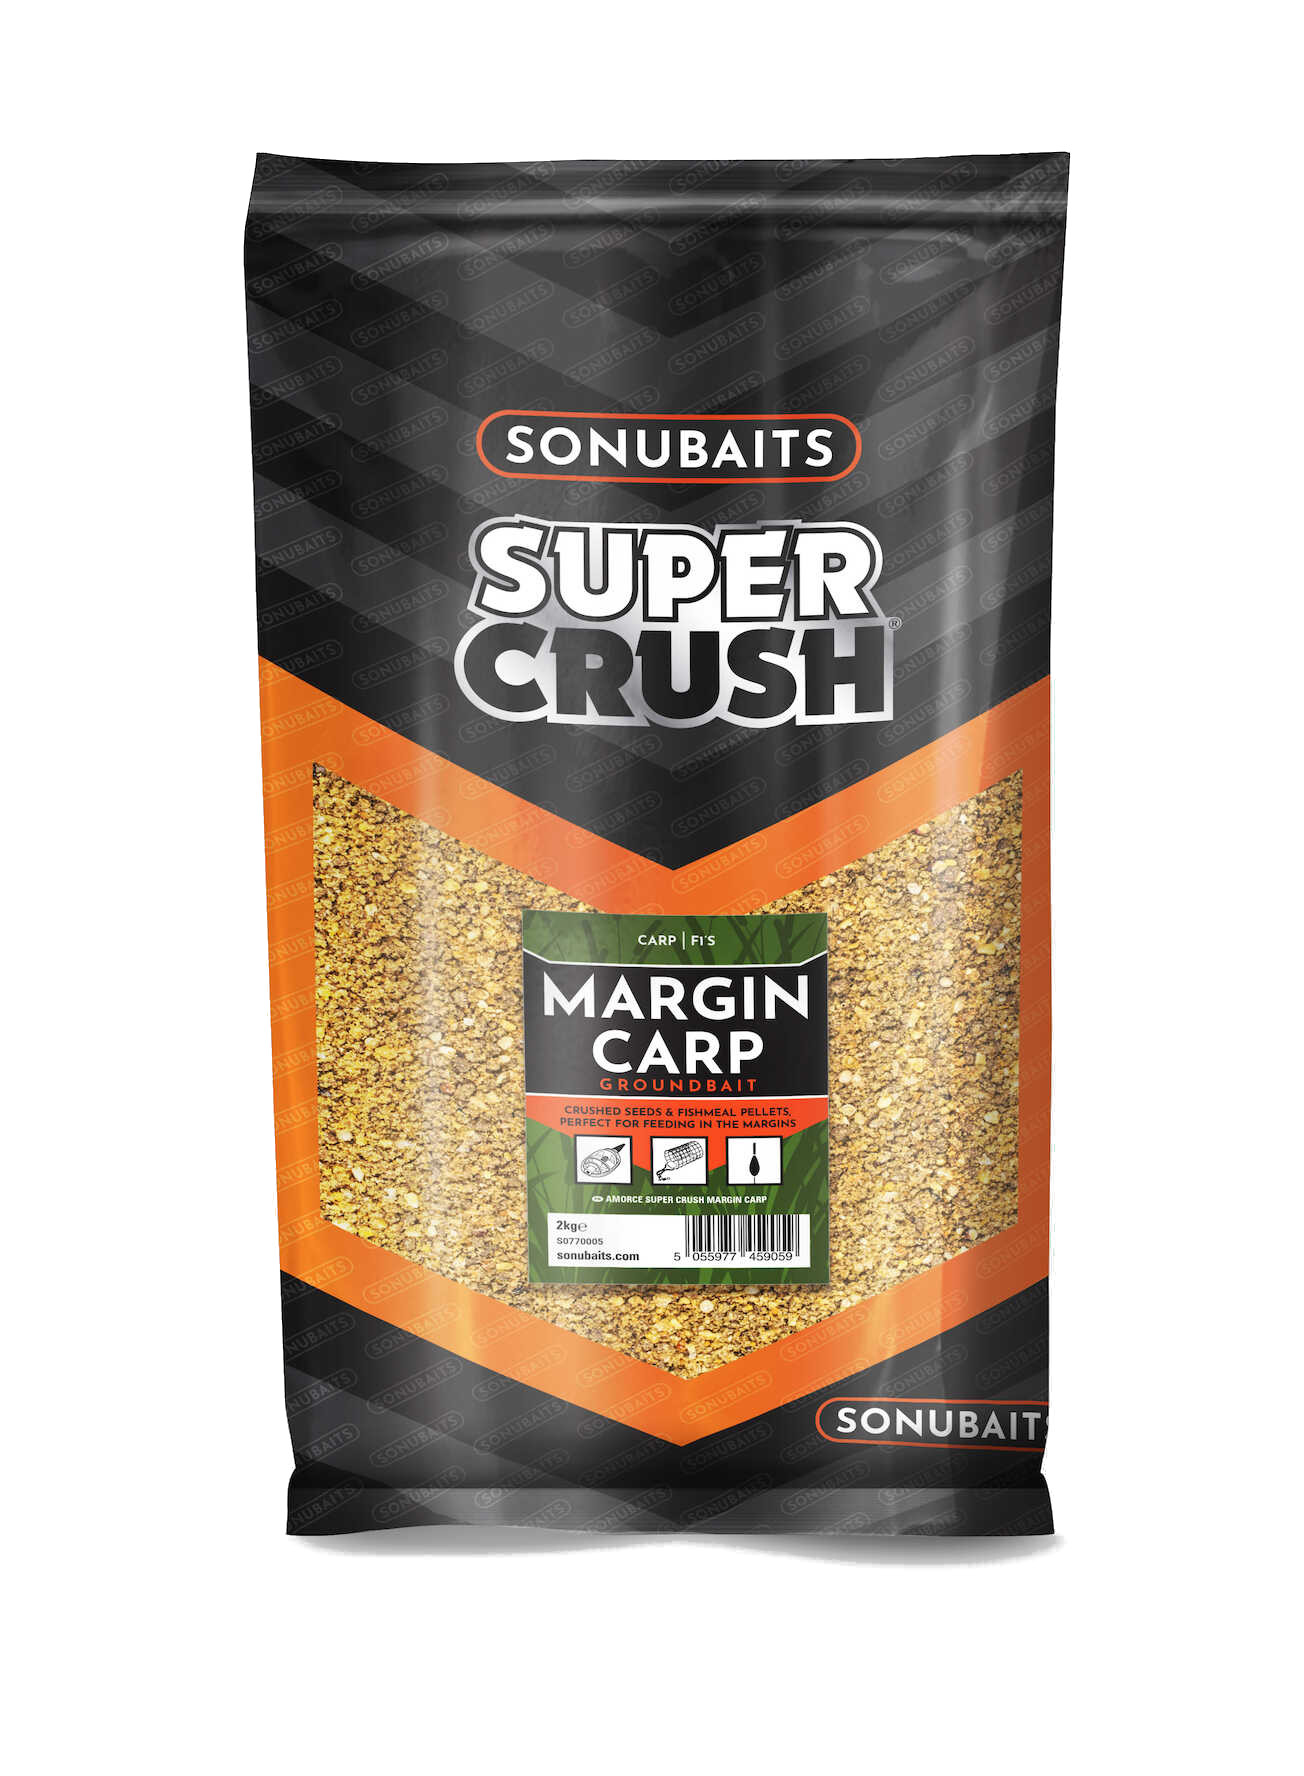 Sonubaits Supercrush Margin Carp (2kg)